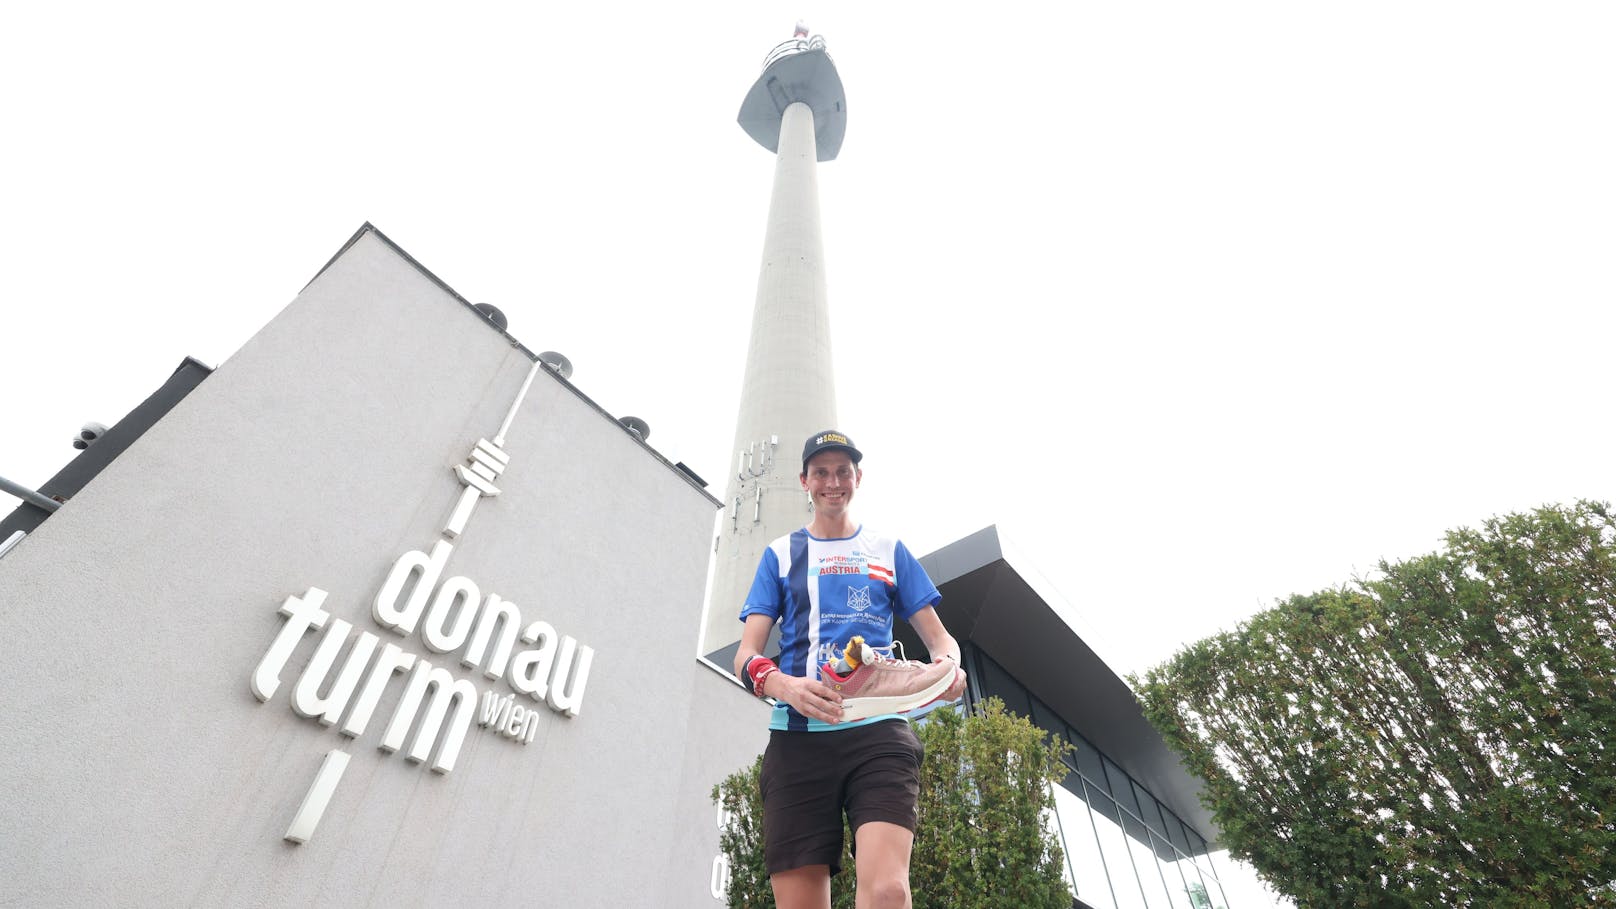 Läufer will 100 Kilometer am Wiener Donauturm abspulen